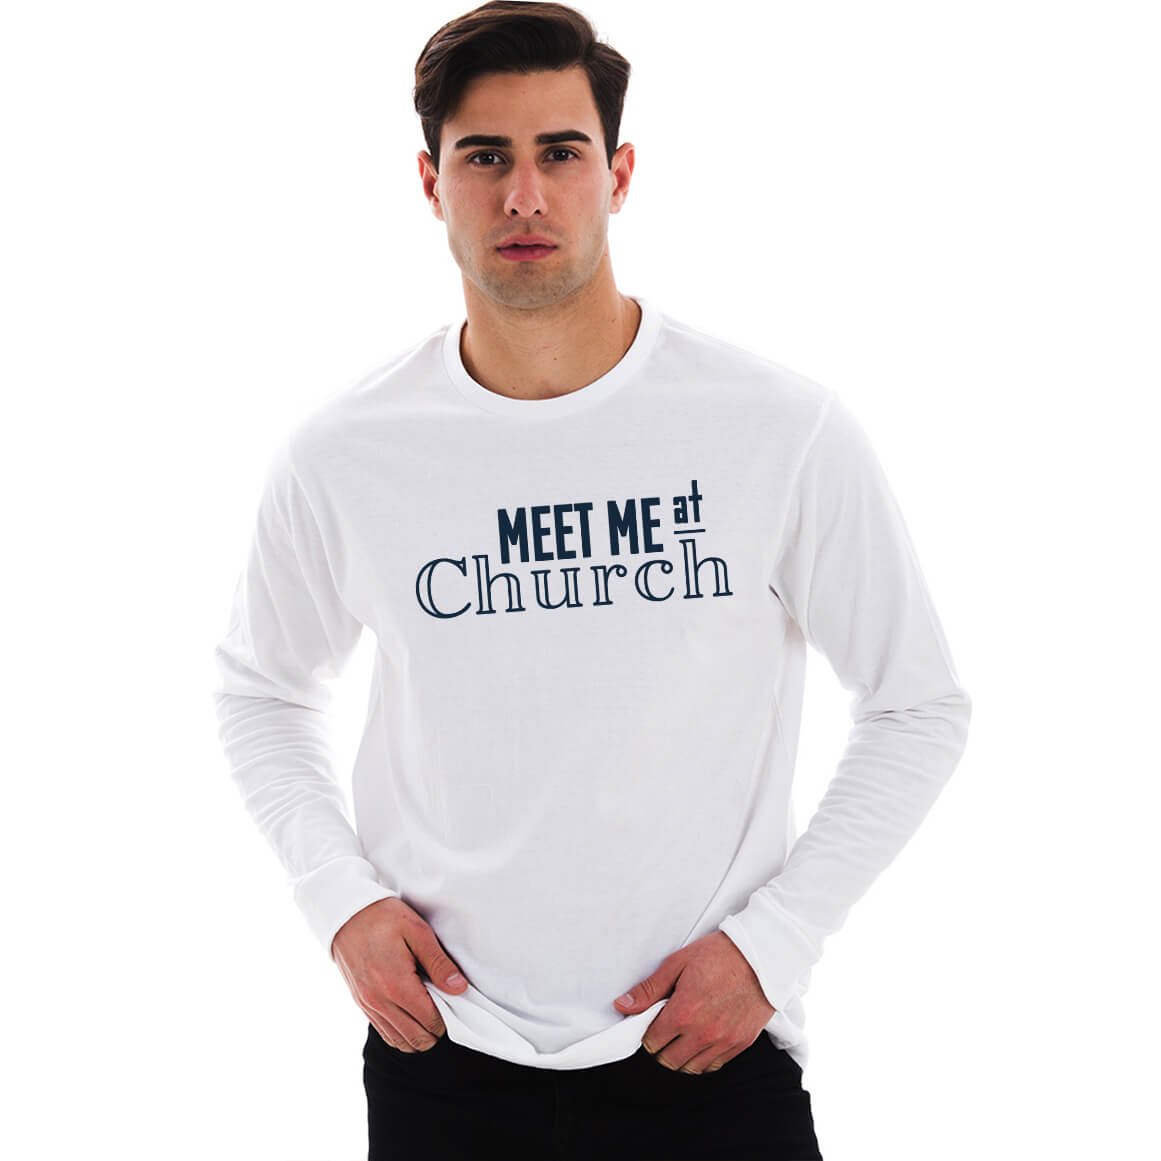 Meet Me At Church Men's Long Sleeve T Shirt